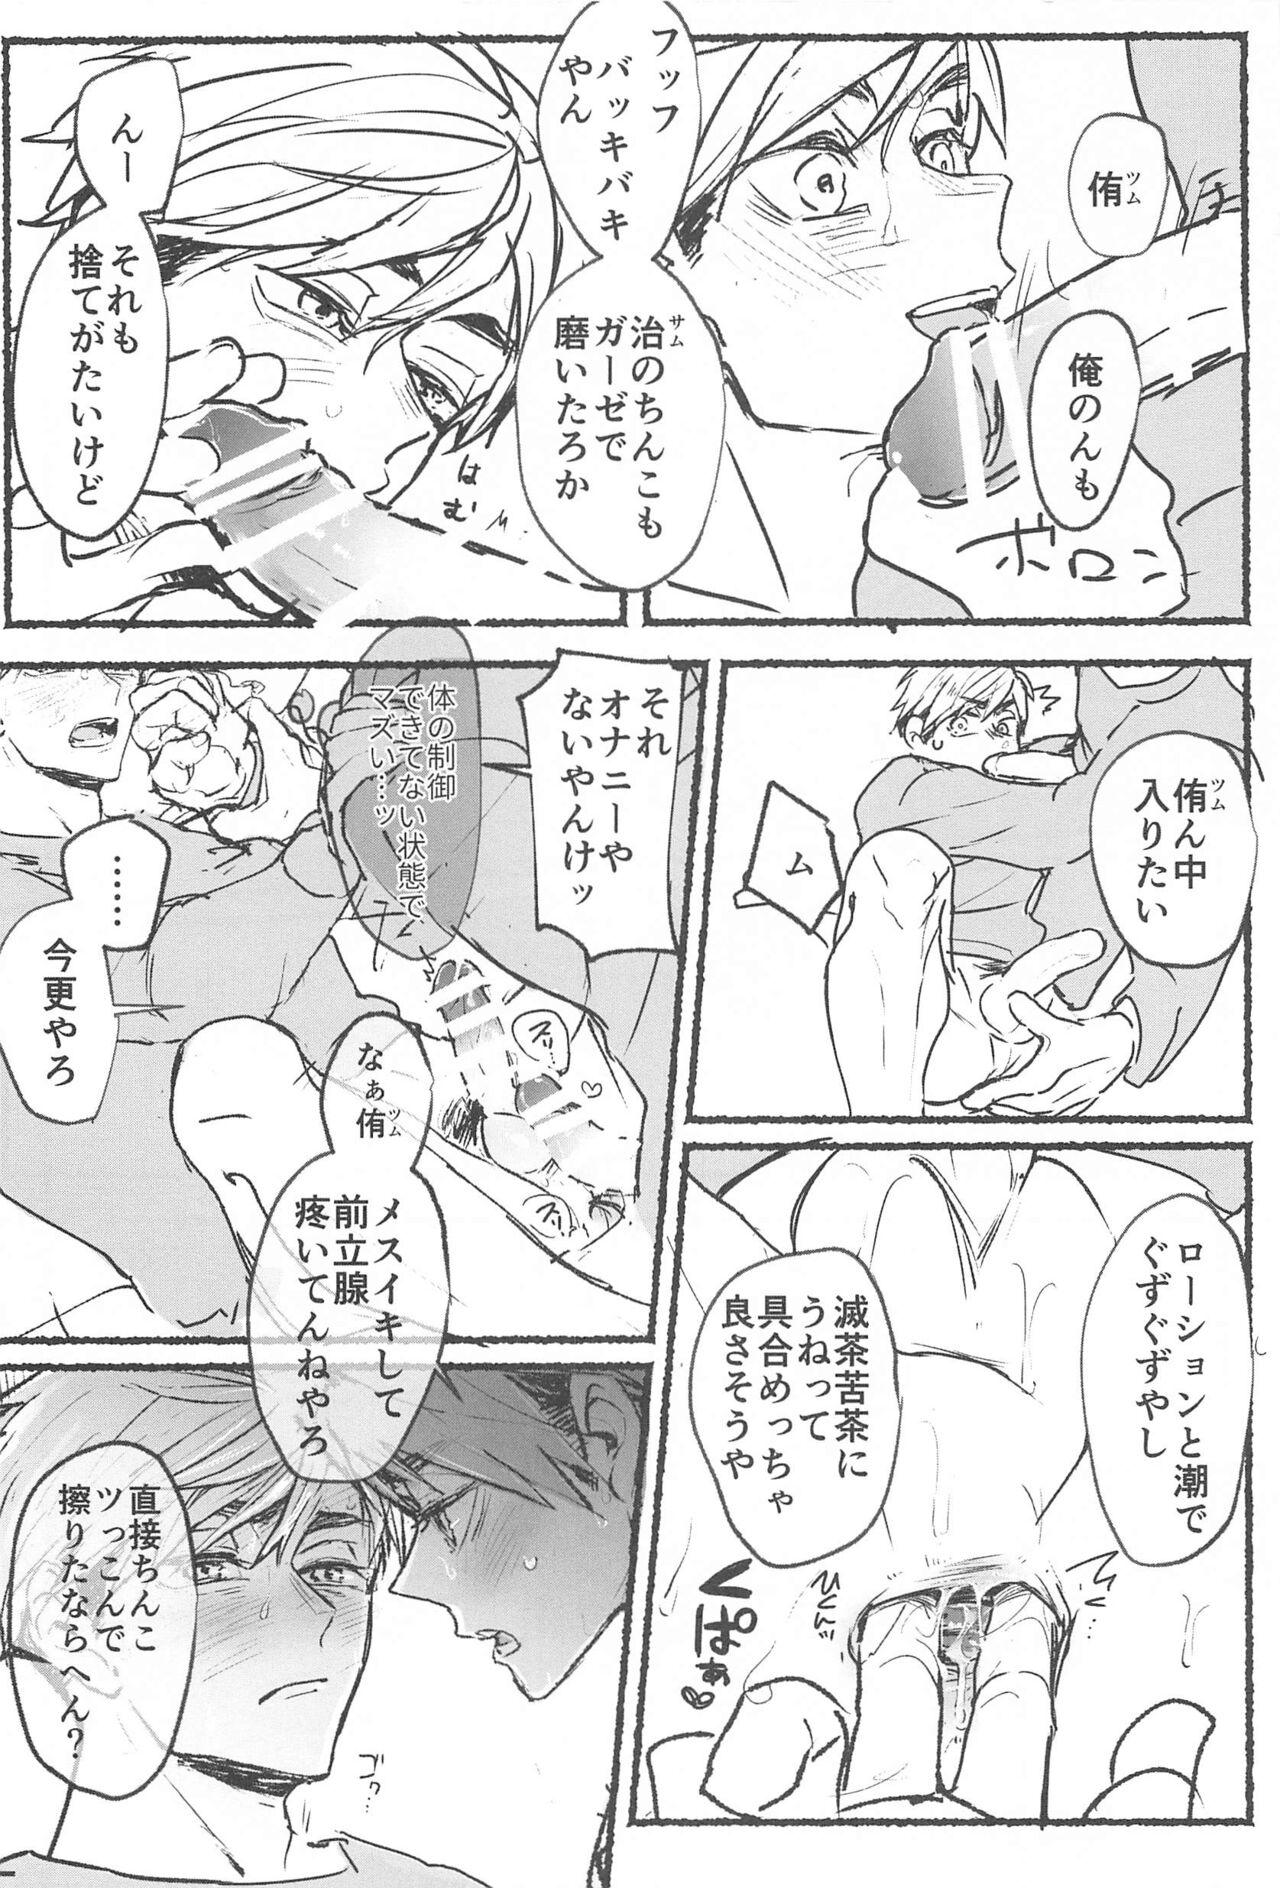 Bear nomoaroshongaze No more lotion gauze！！ - Haikyuu Hardcoresex - Page 7